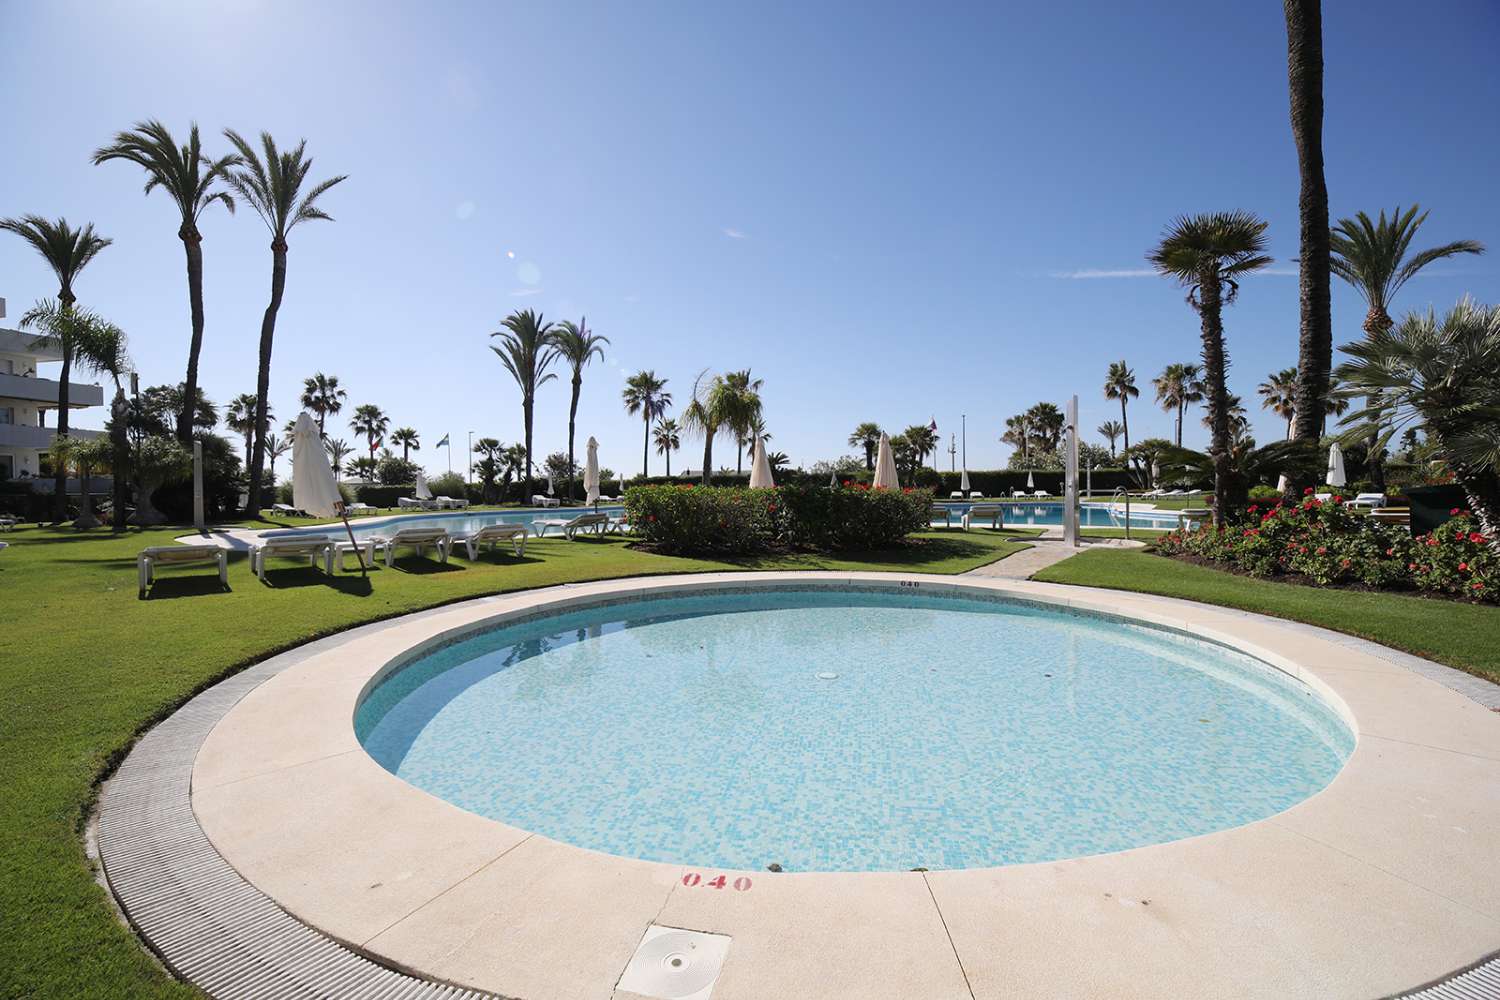 Location appartement à Los Granados, Puerto Banus. Complexe de première ligne de plage, Marbella.